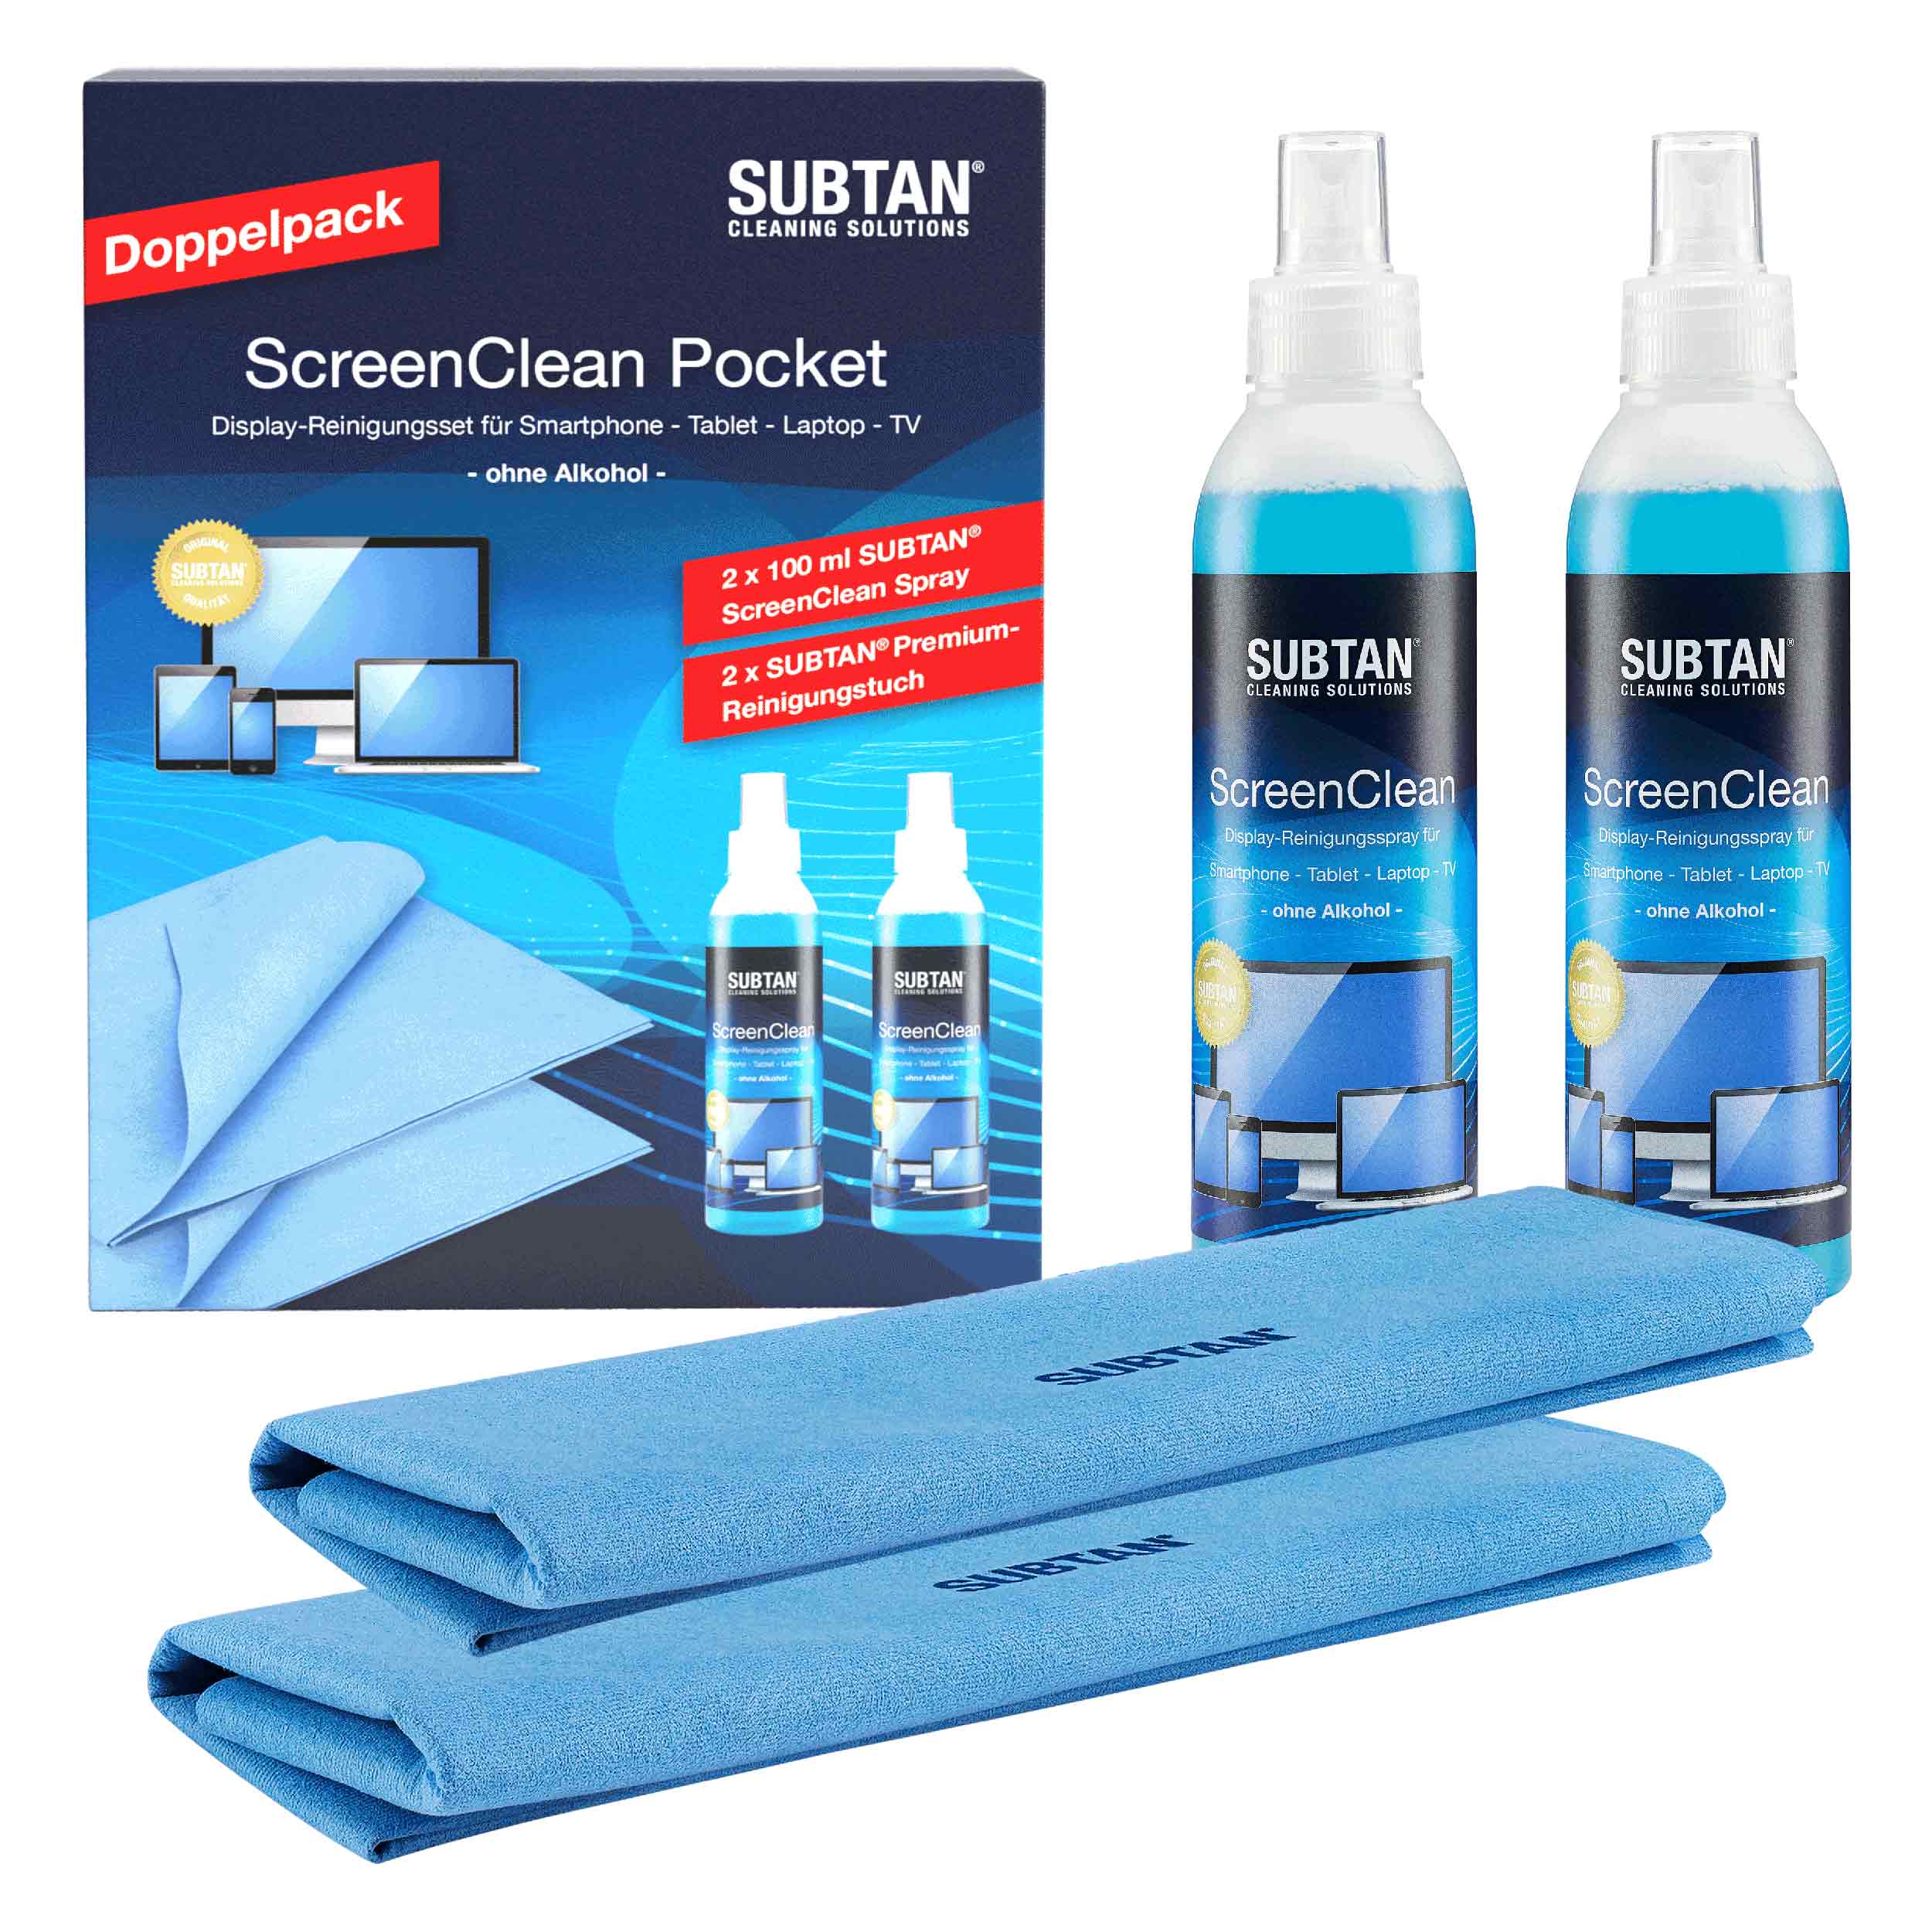 SUBTAN ScreenClean Pocket - Doppelpack